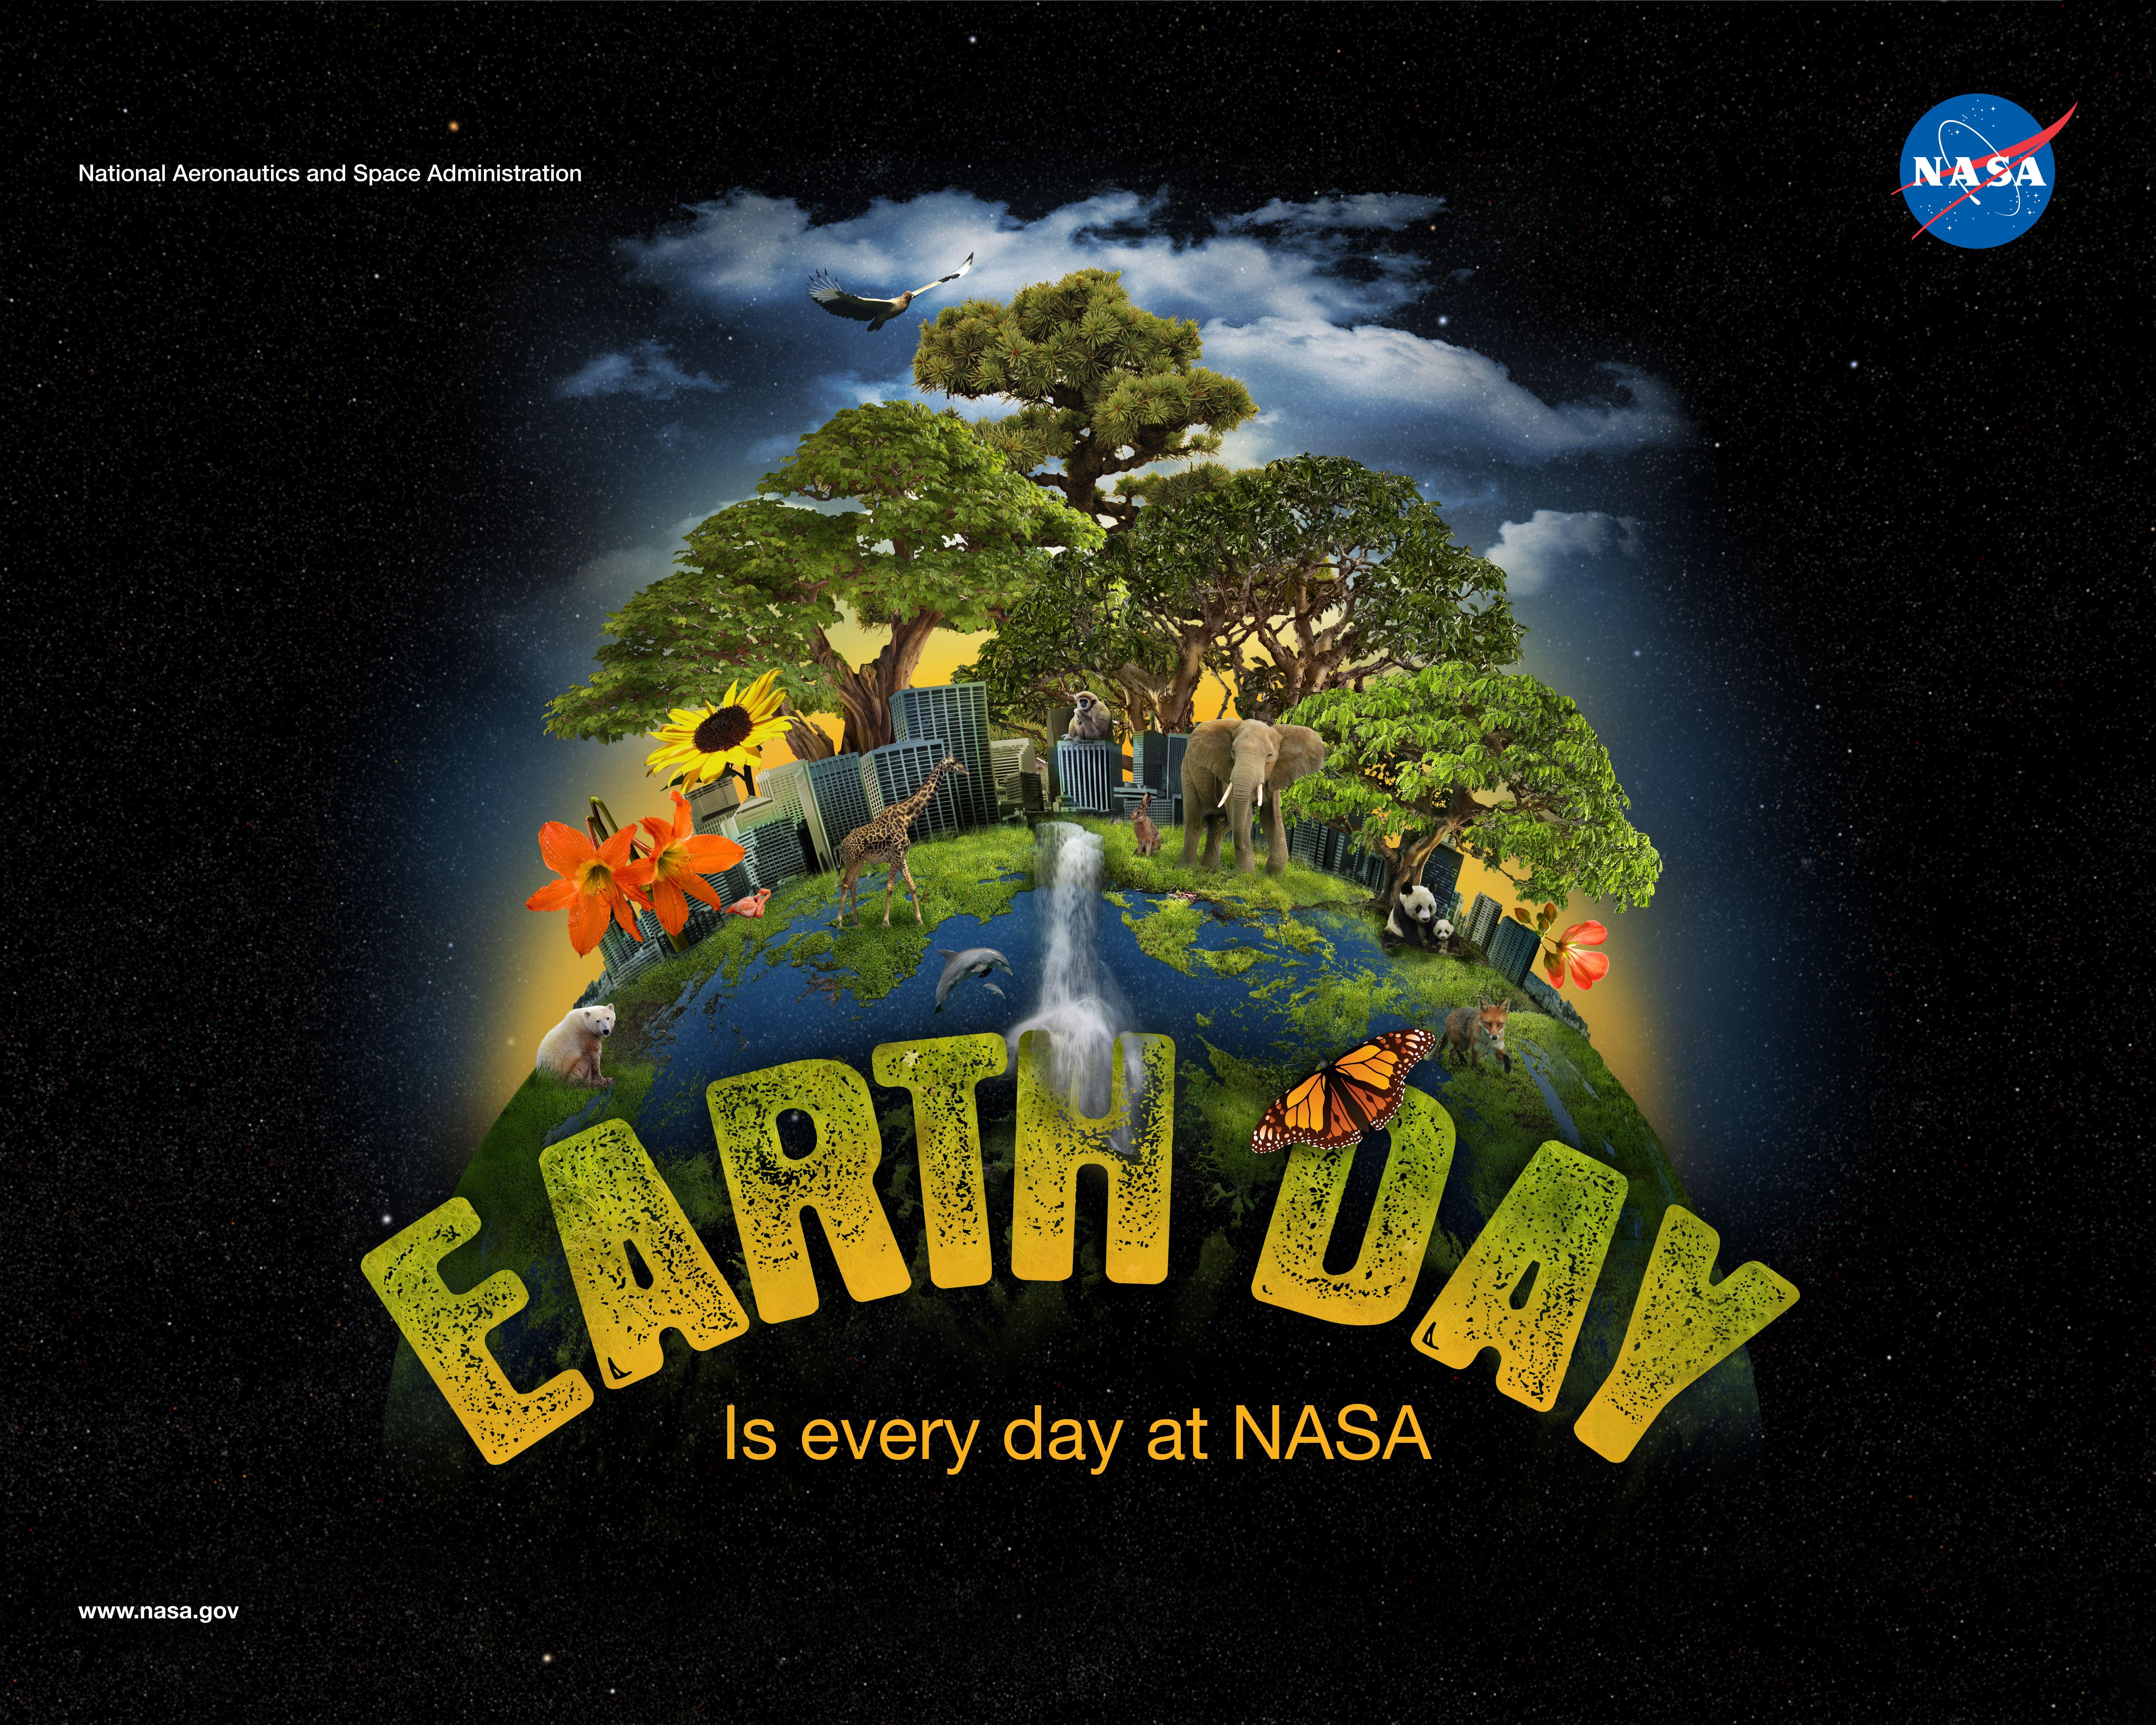 NASA Celebrates Earth Day 2012 in the Washington Area